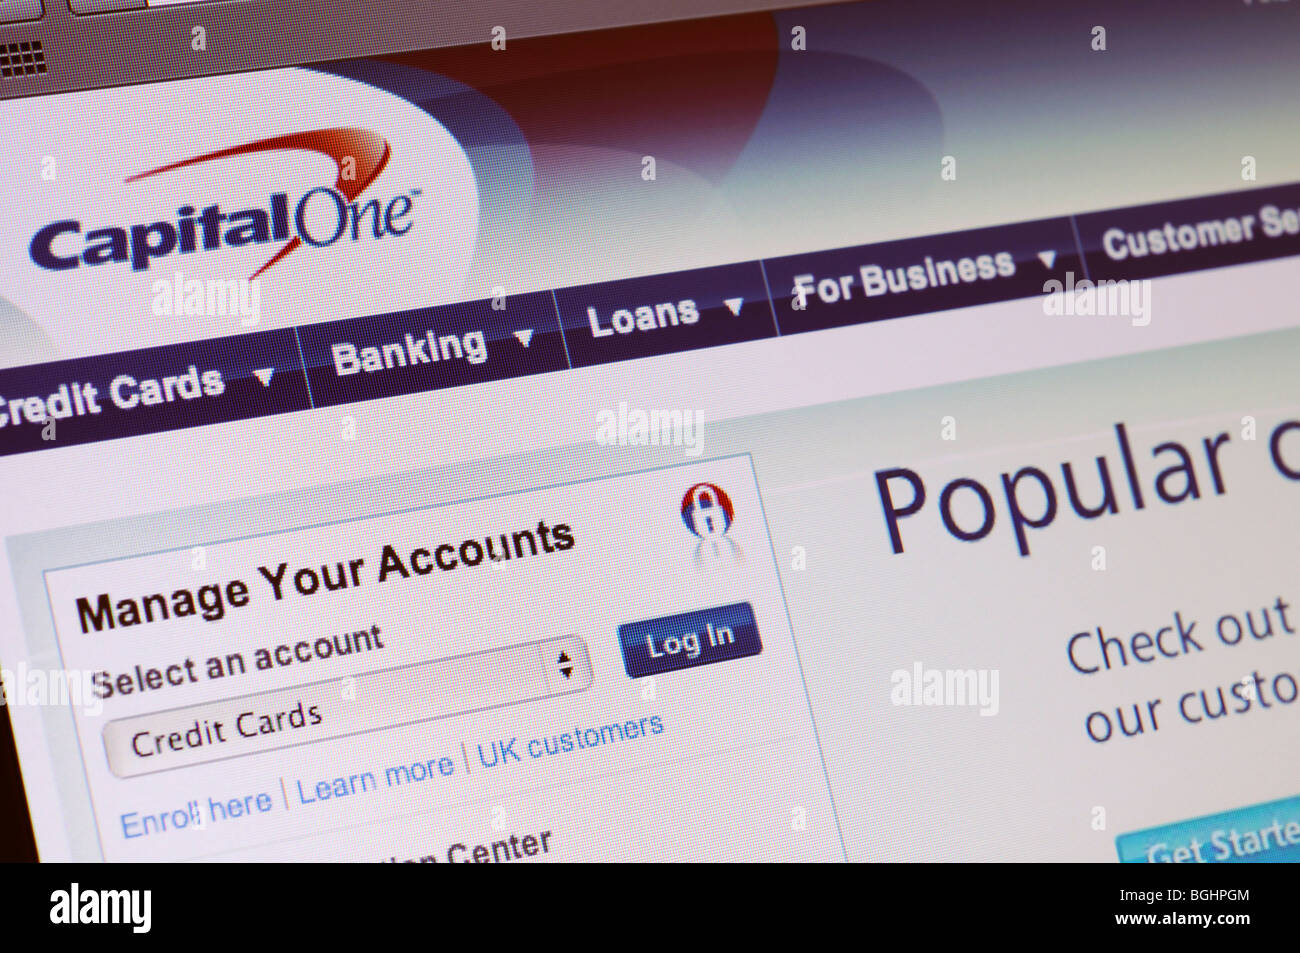 Capital One Bank website Stock Photo